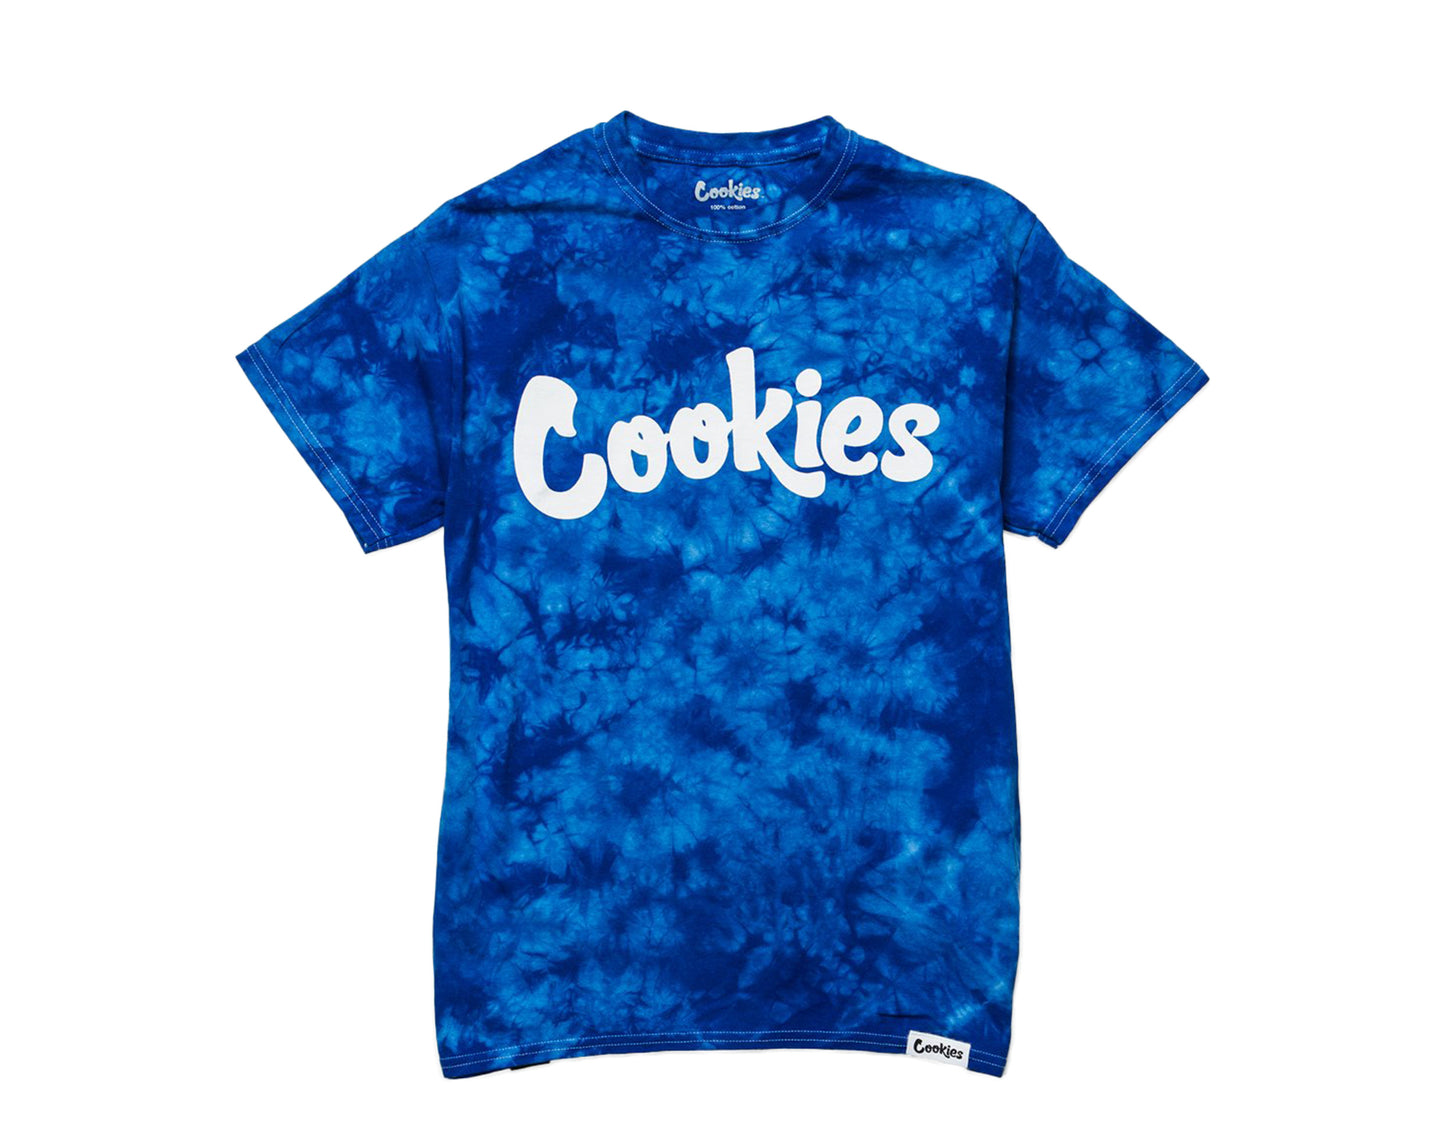 Cookies Original Logo Crystal Wash Tie Dye Royal Blue Men's Tee Shirt 1540T3735-ROY